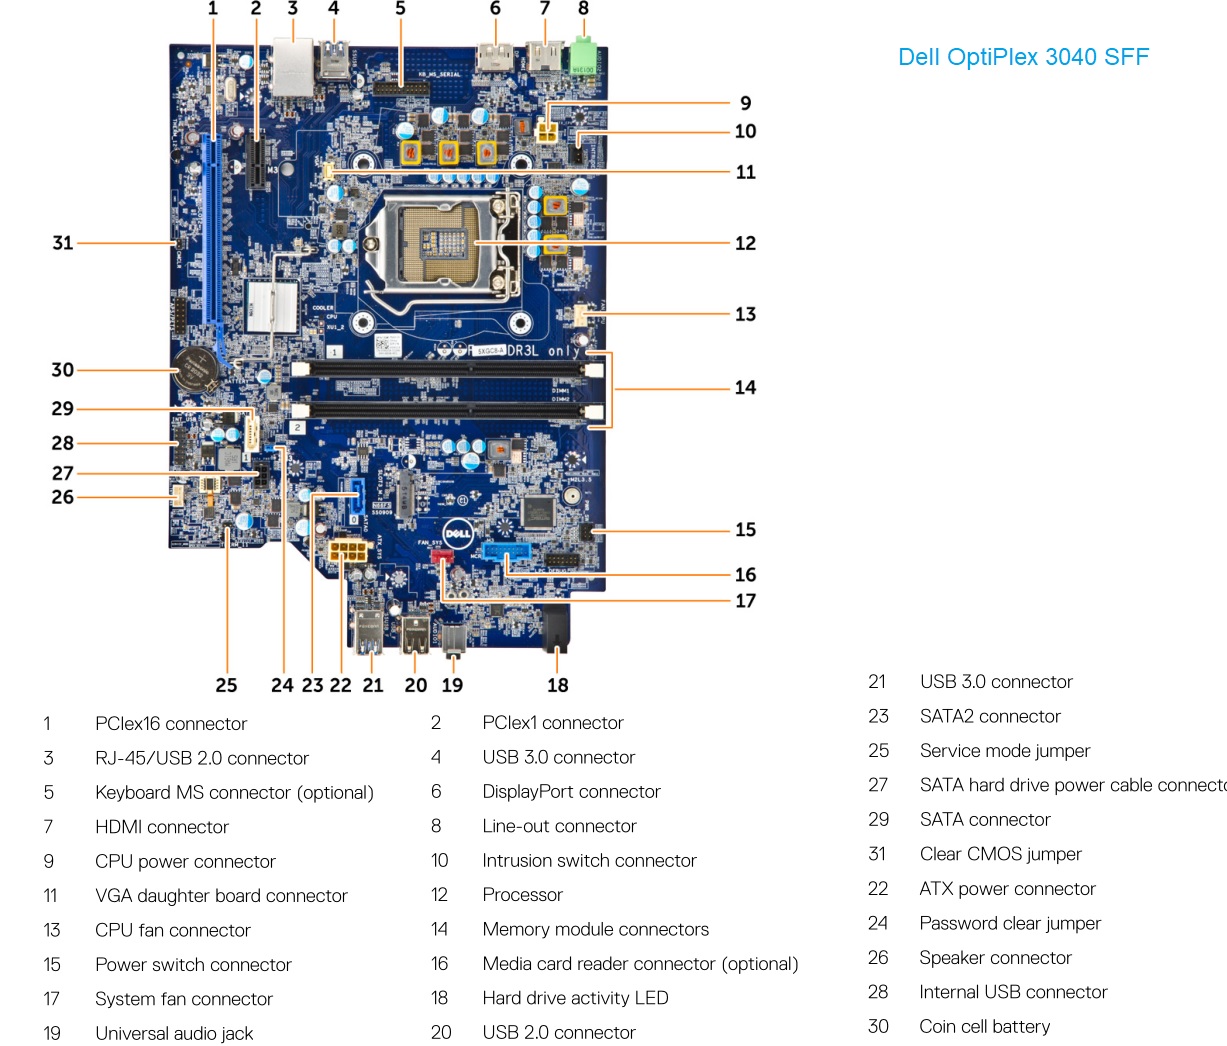 Dell_OptiPlex_3040_SFF_motherboard.jpg motherboard layout